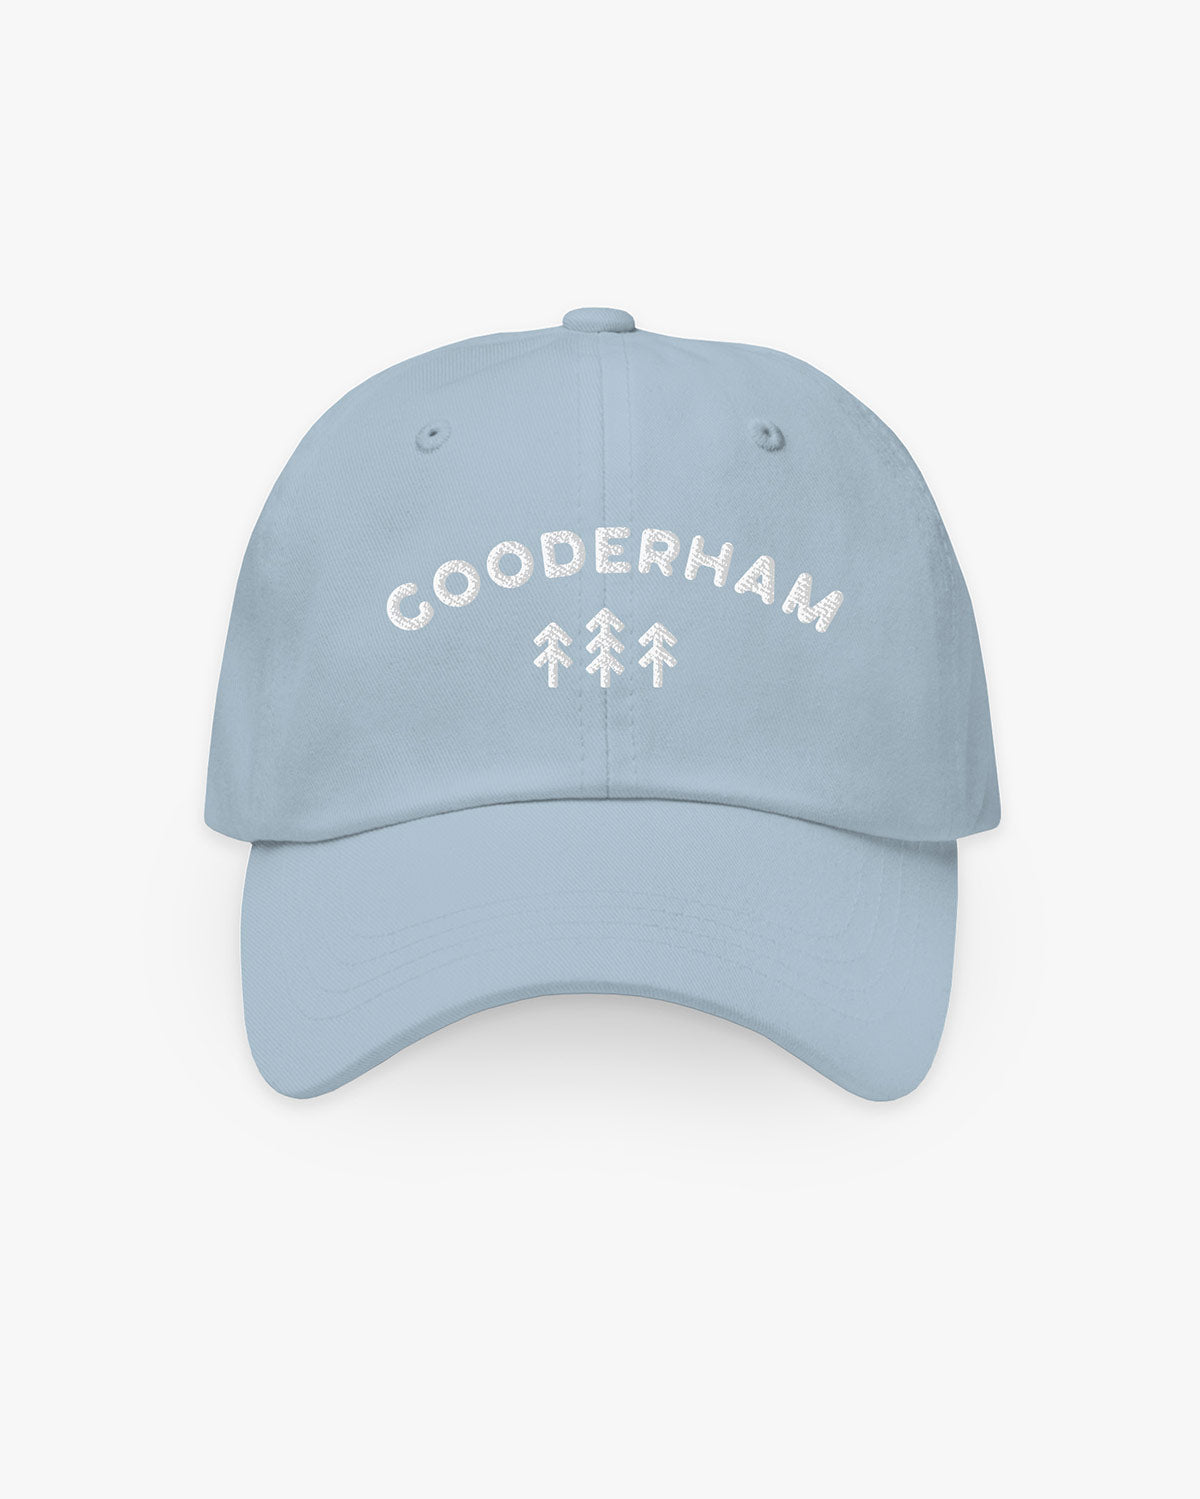 Trees - Gooderham - Hat